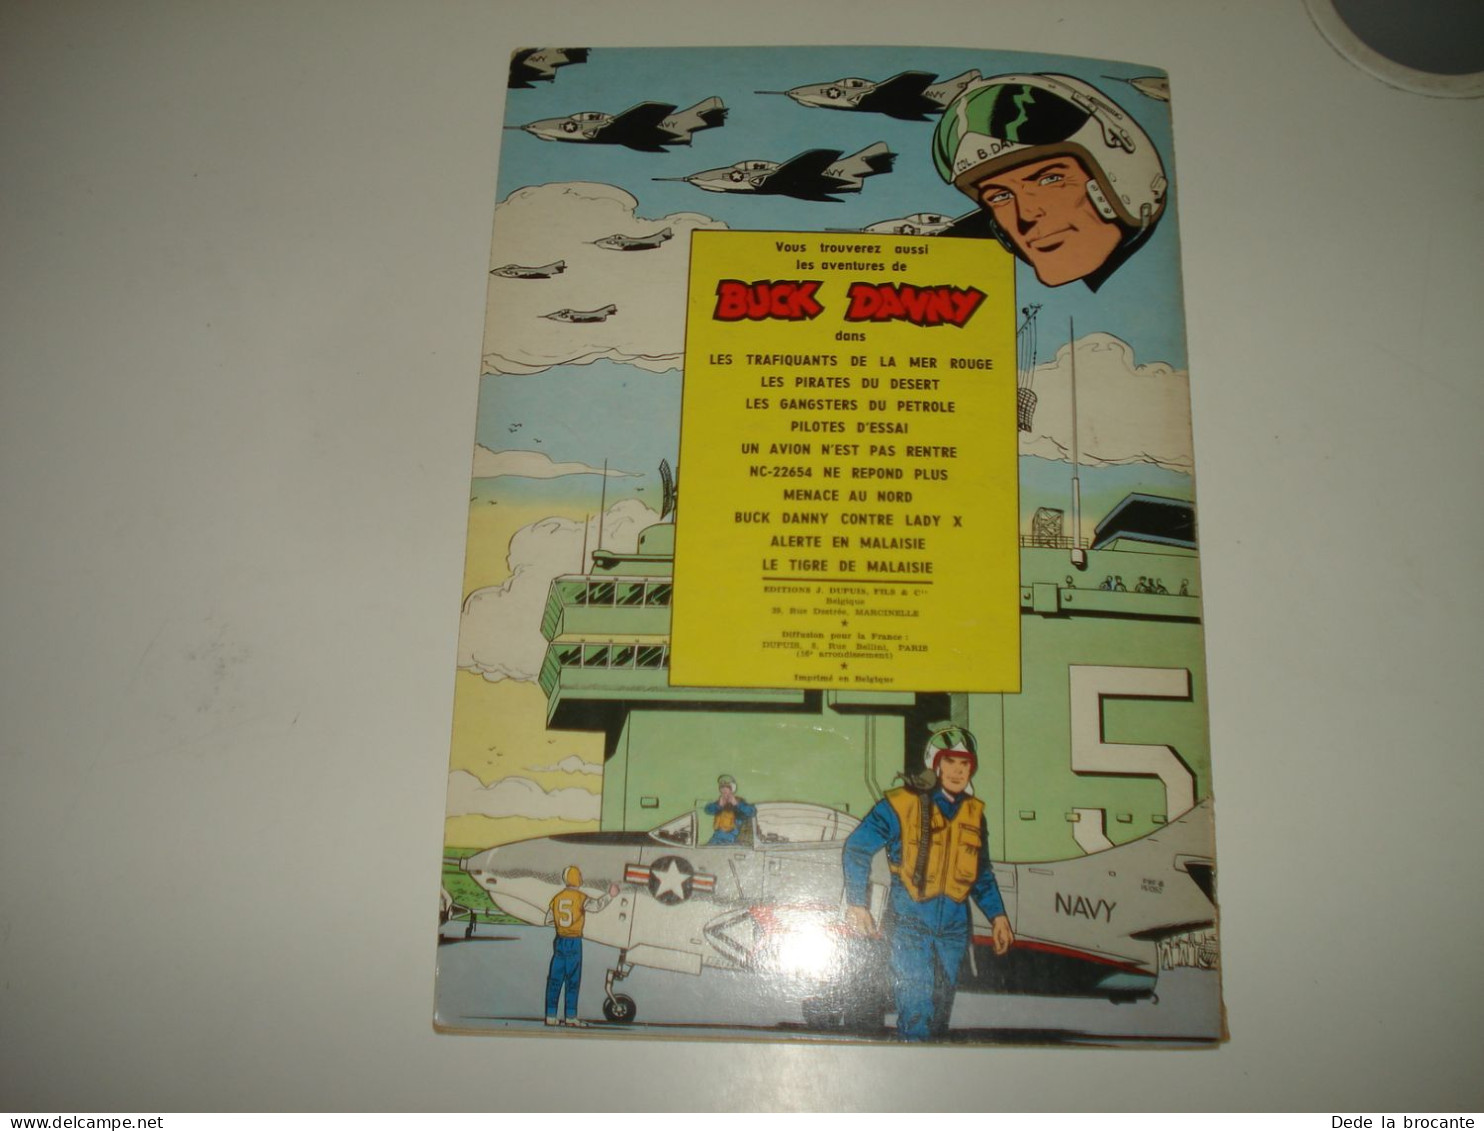 C54 / Buck Danny  20 " SOS soucoupes volantes !  " E.O 1959 - Petit prix